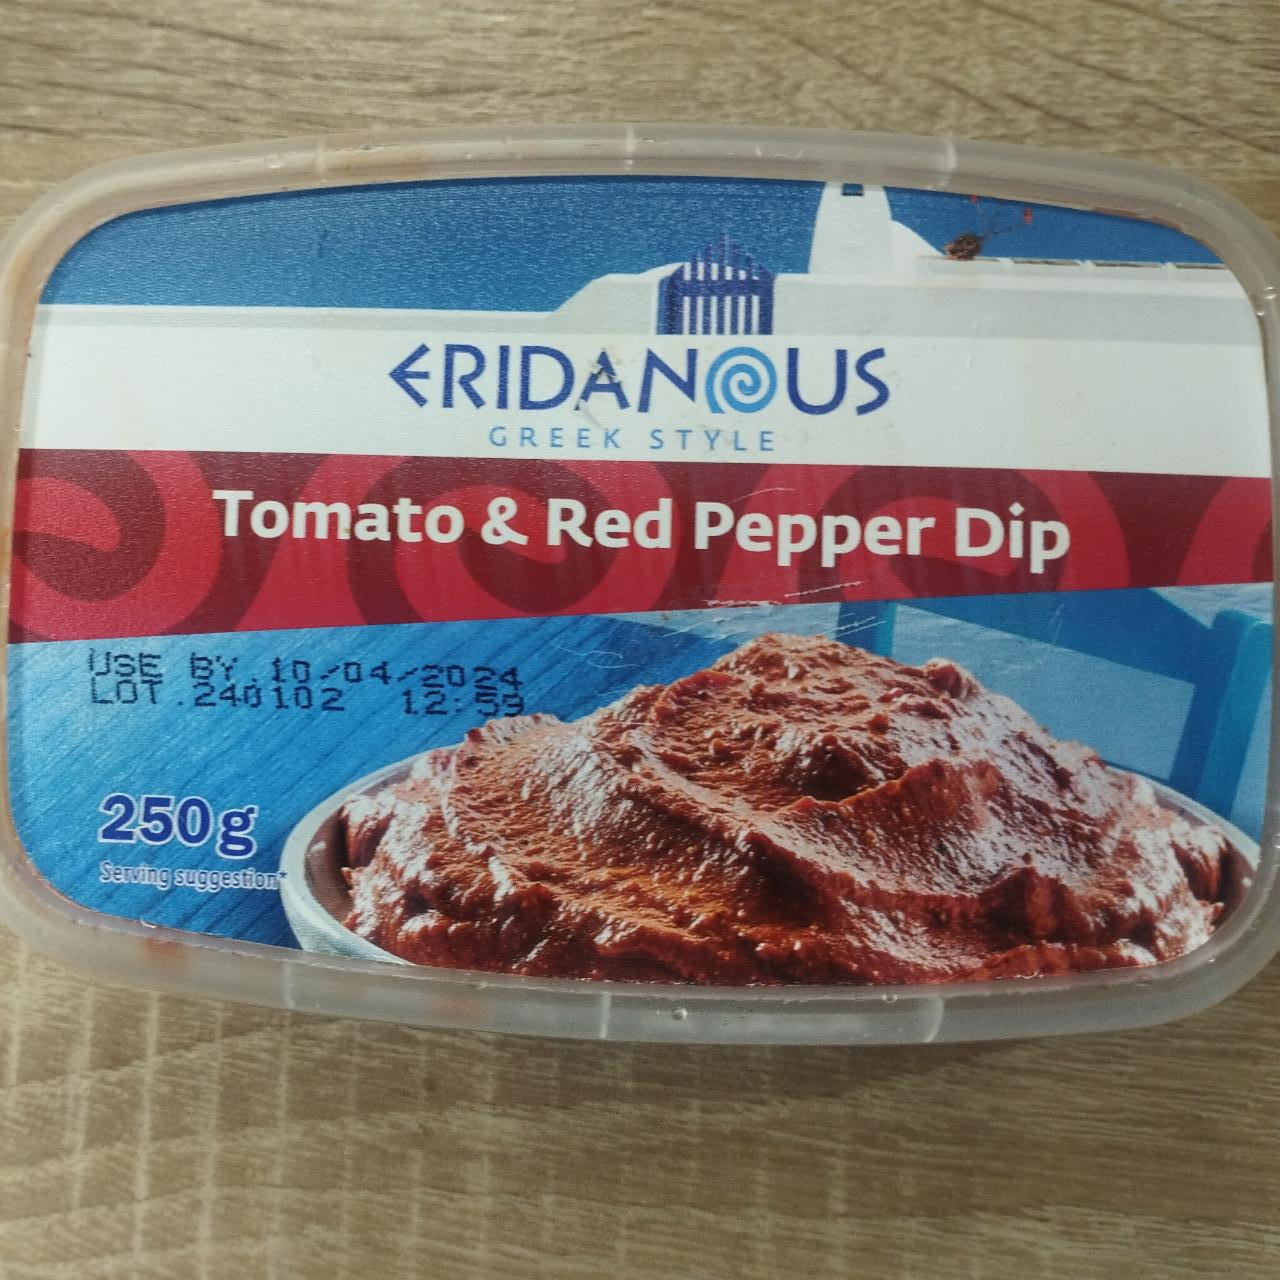 Képek - Tomato & red pepper dip Eridanous